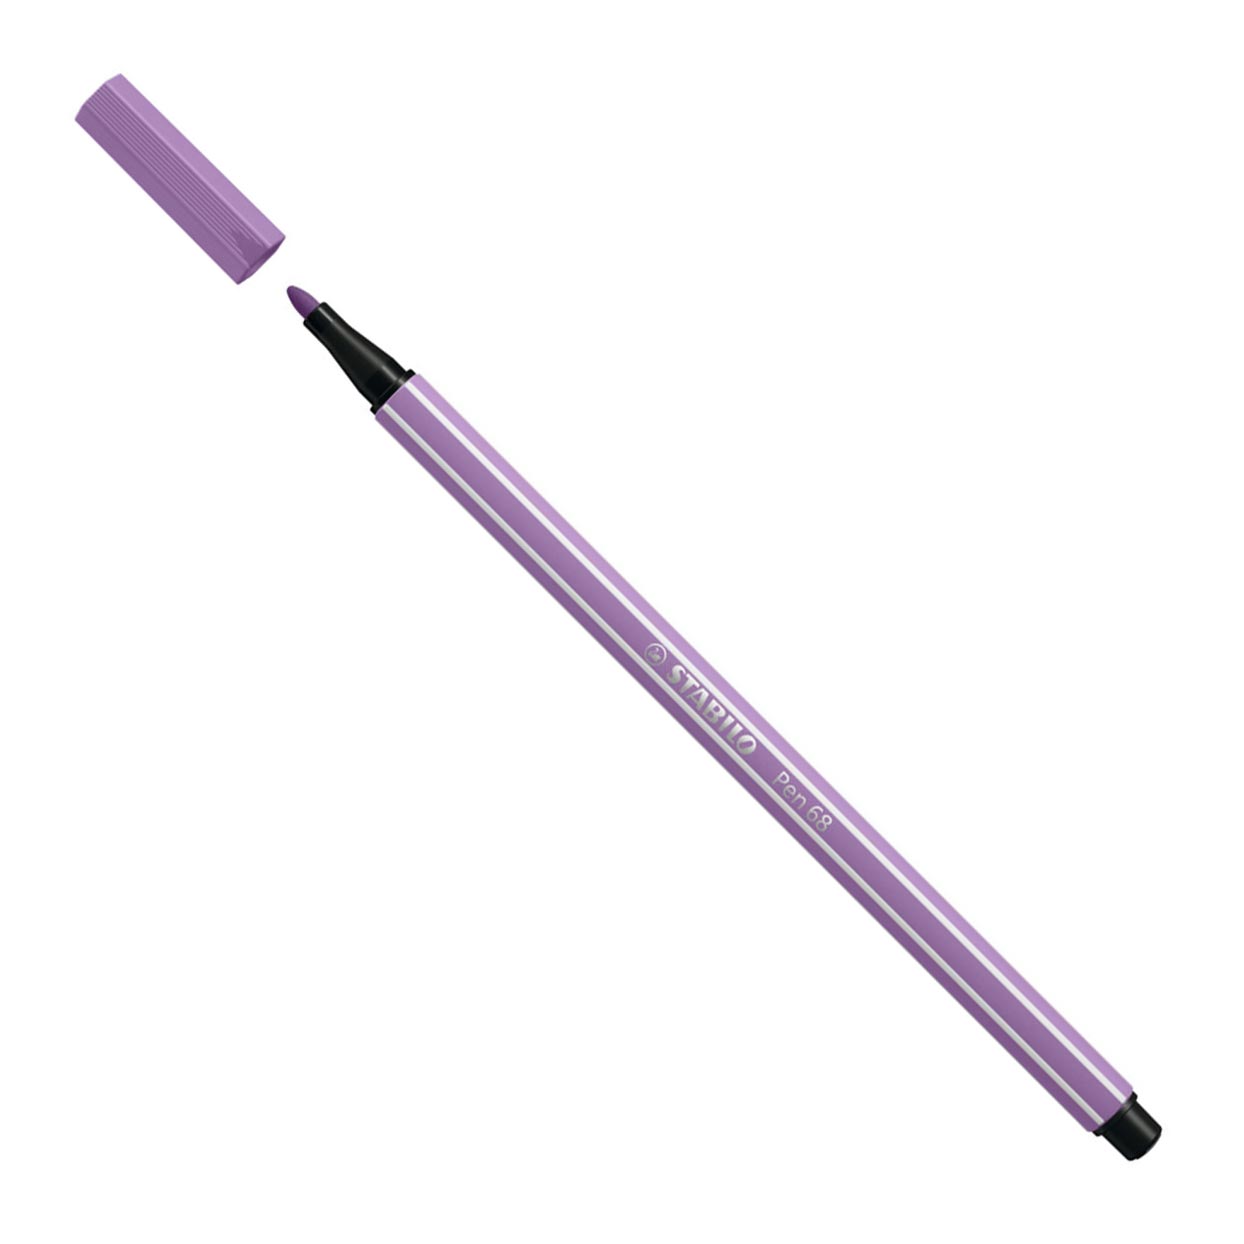 STABILO Pen 68 - Filzstift - Graues Violett (68/62)